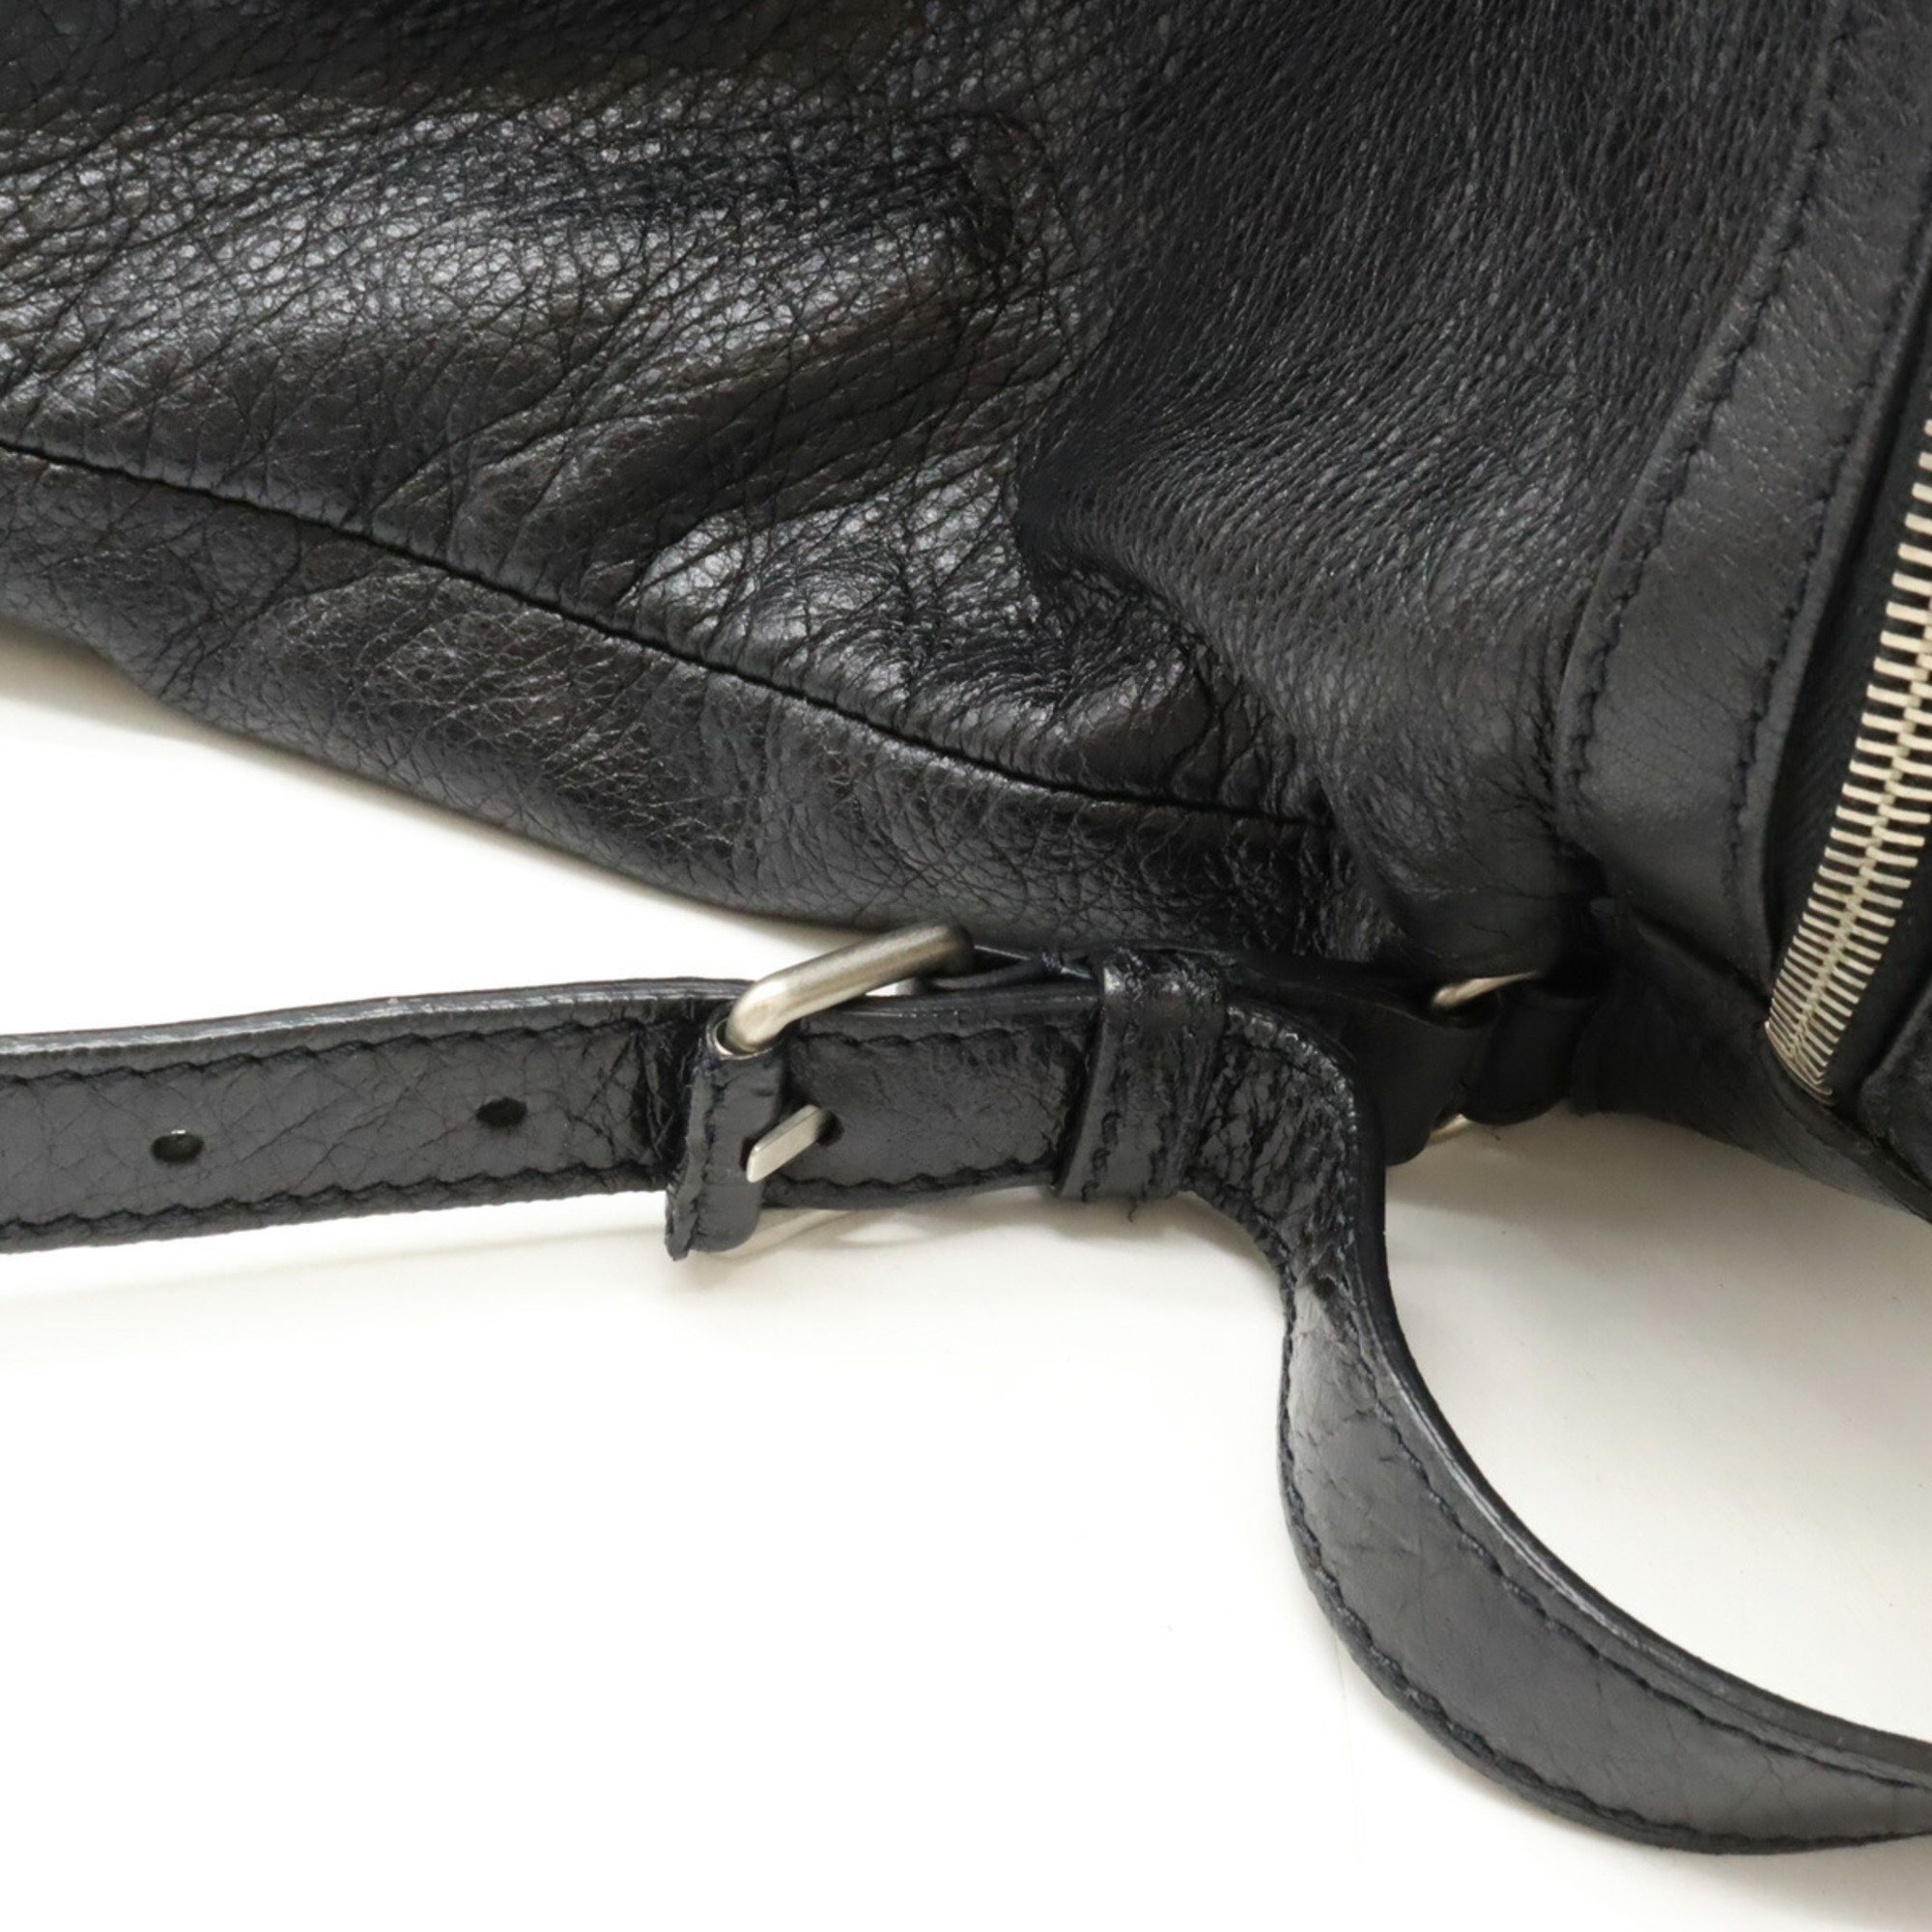 BALENCIAGA Traveler Backpack Leather Black 340138